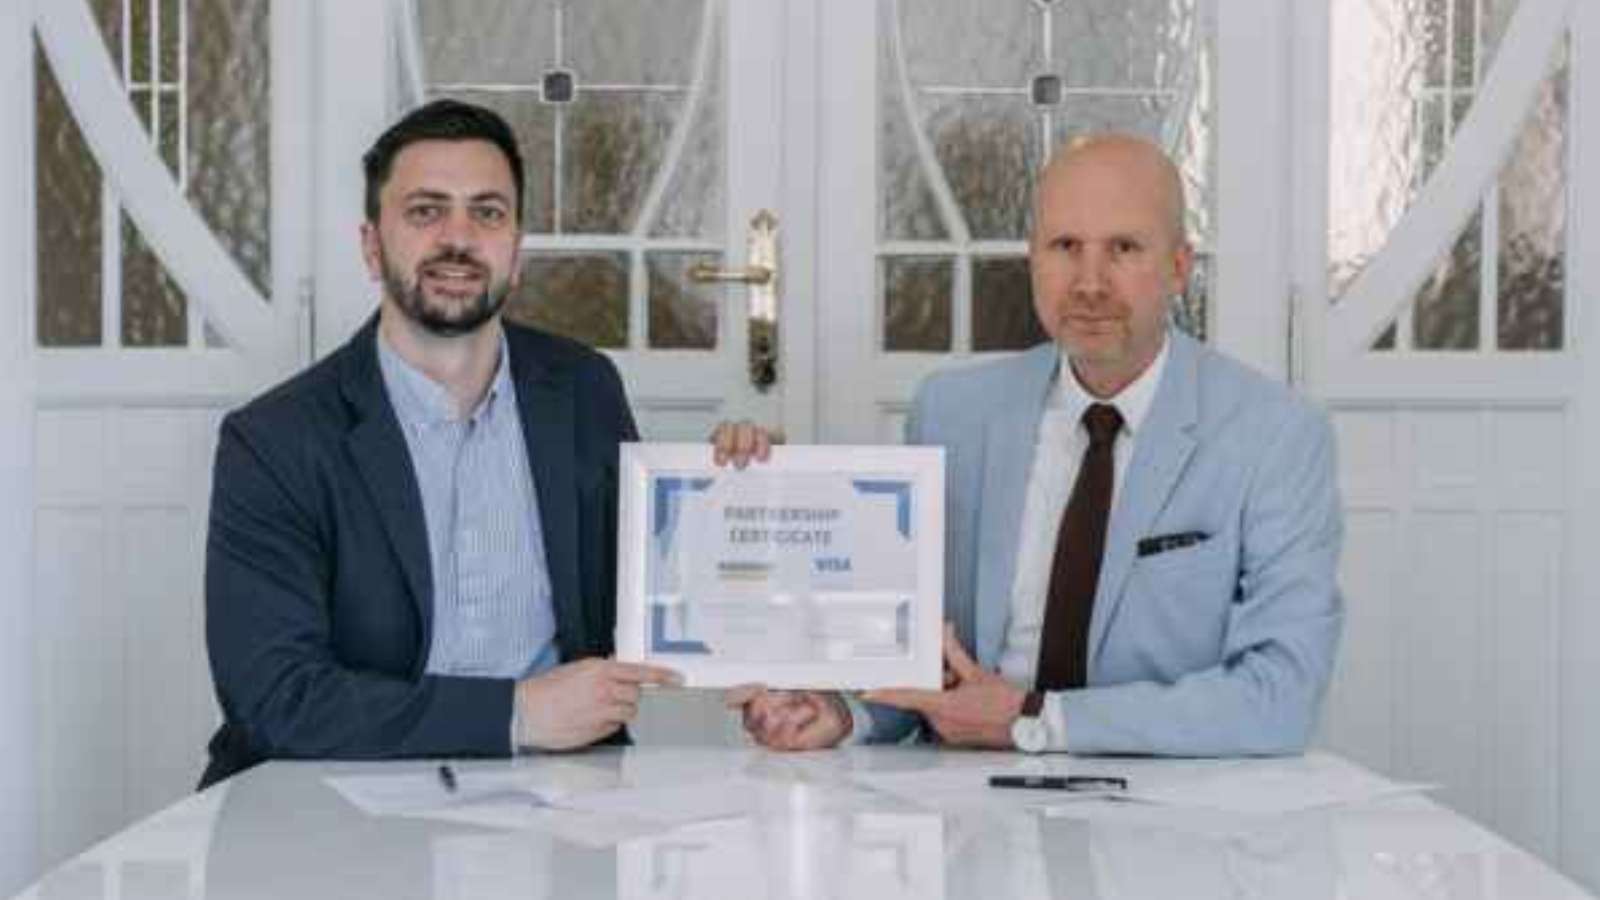 Two men hold a certificate of partnership between VISA and Moris Design